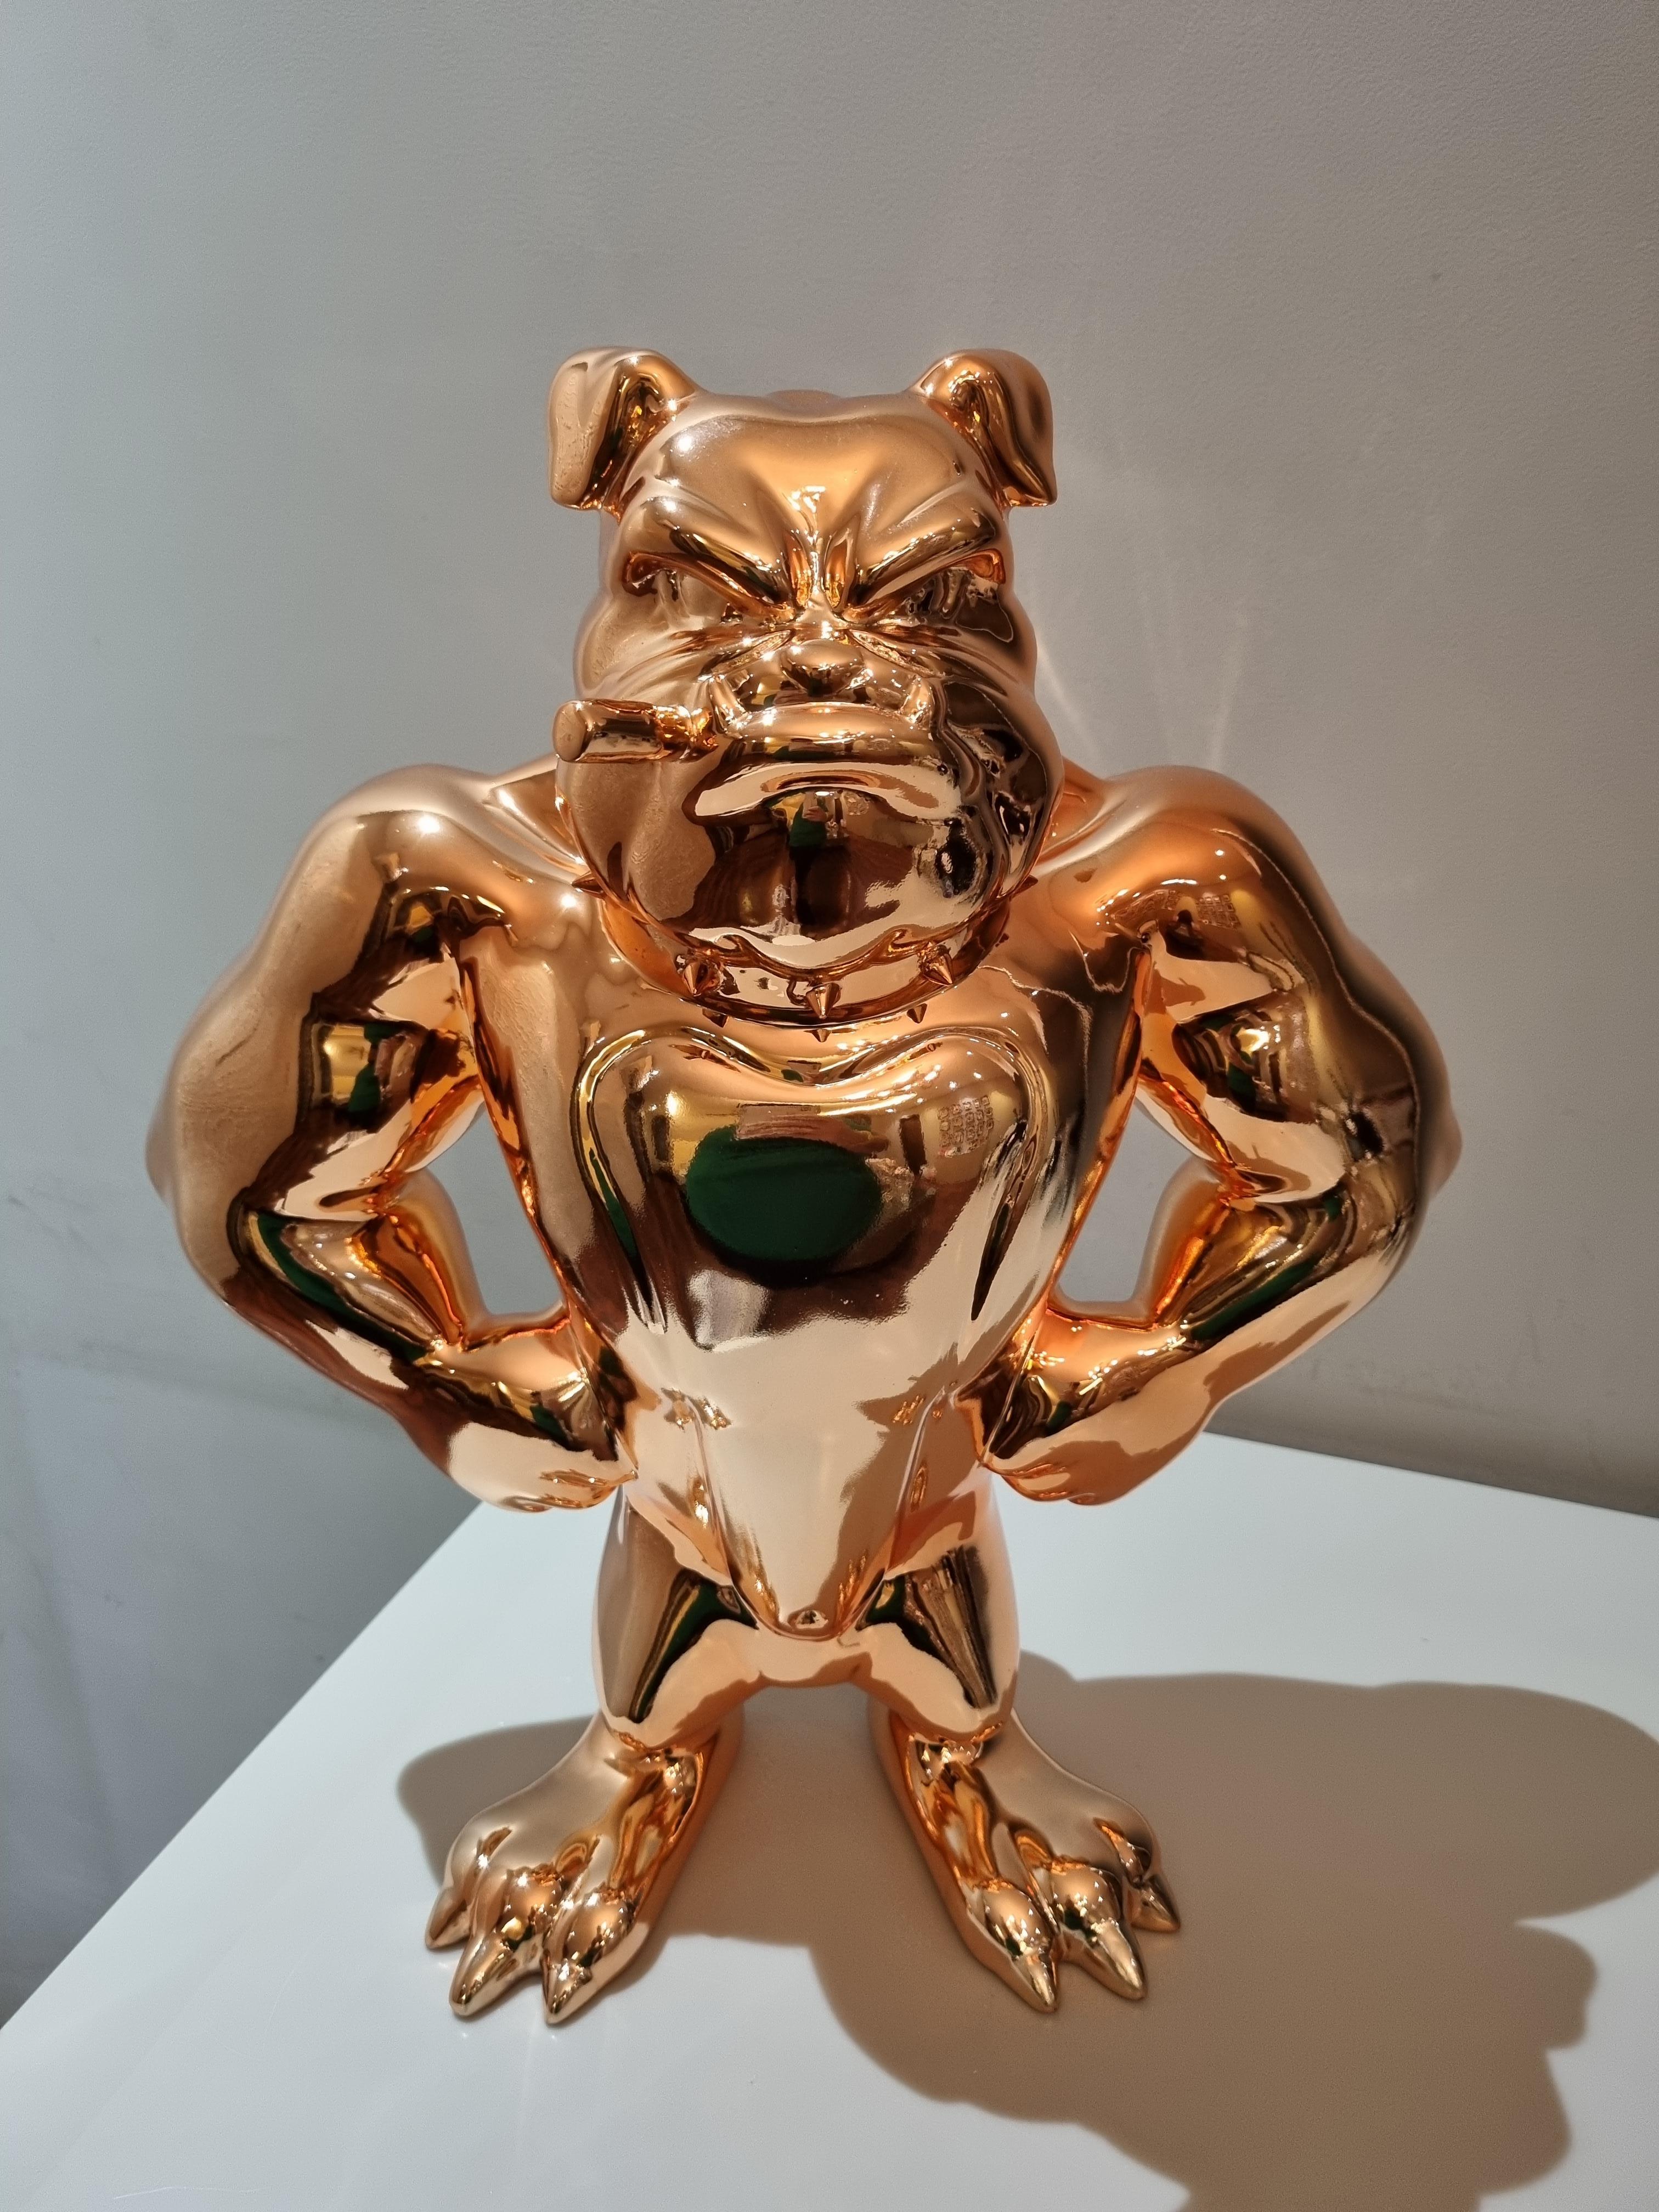 Boss Dog 2-original iconic bulldog sculpture figure-contemporary Art-artwork - Sculpture by Sanuj Birla